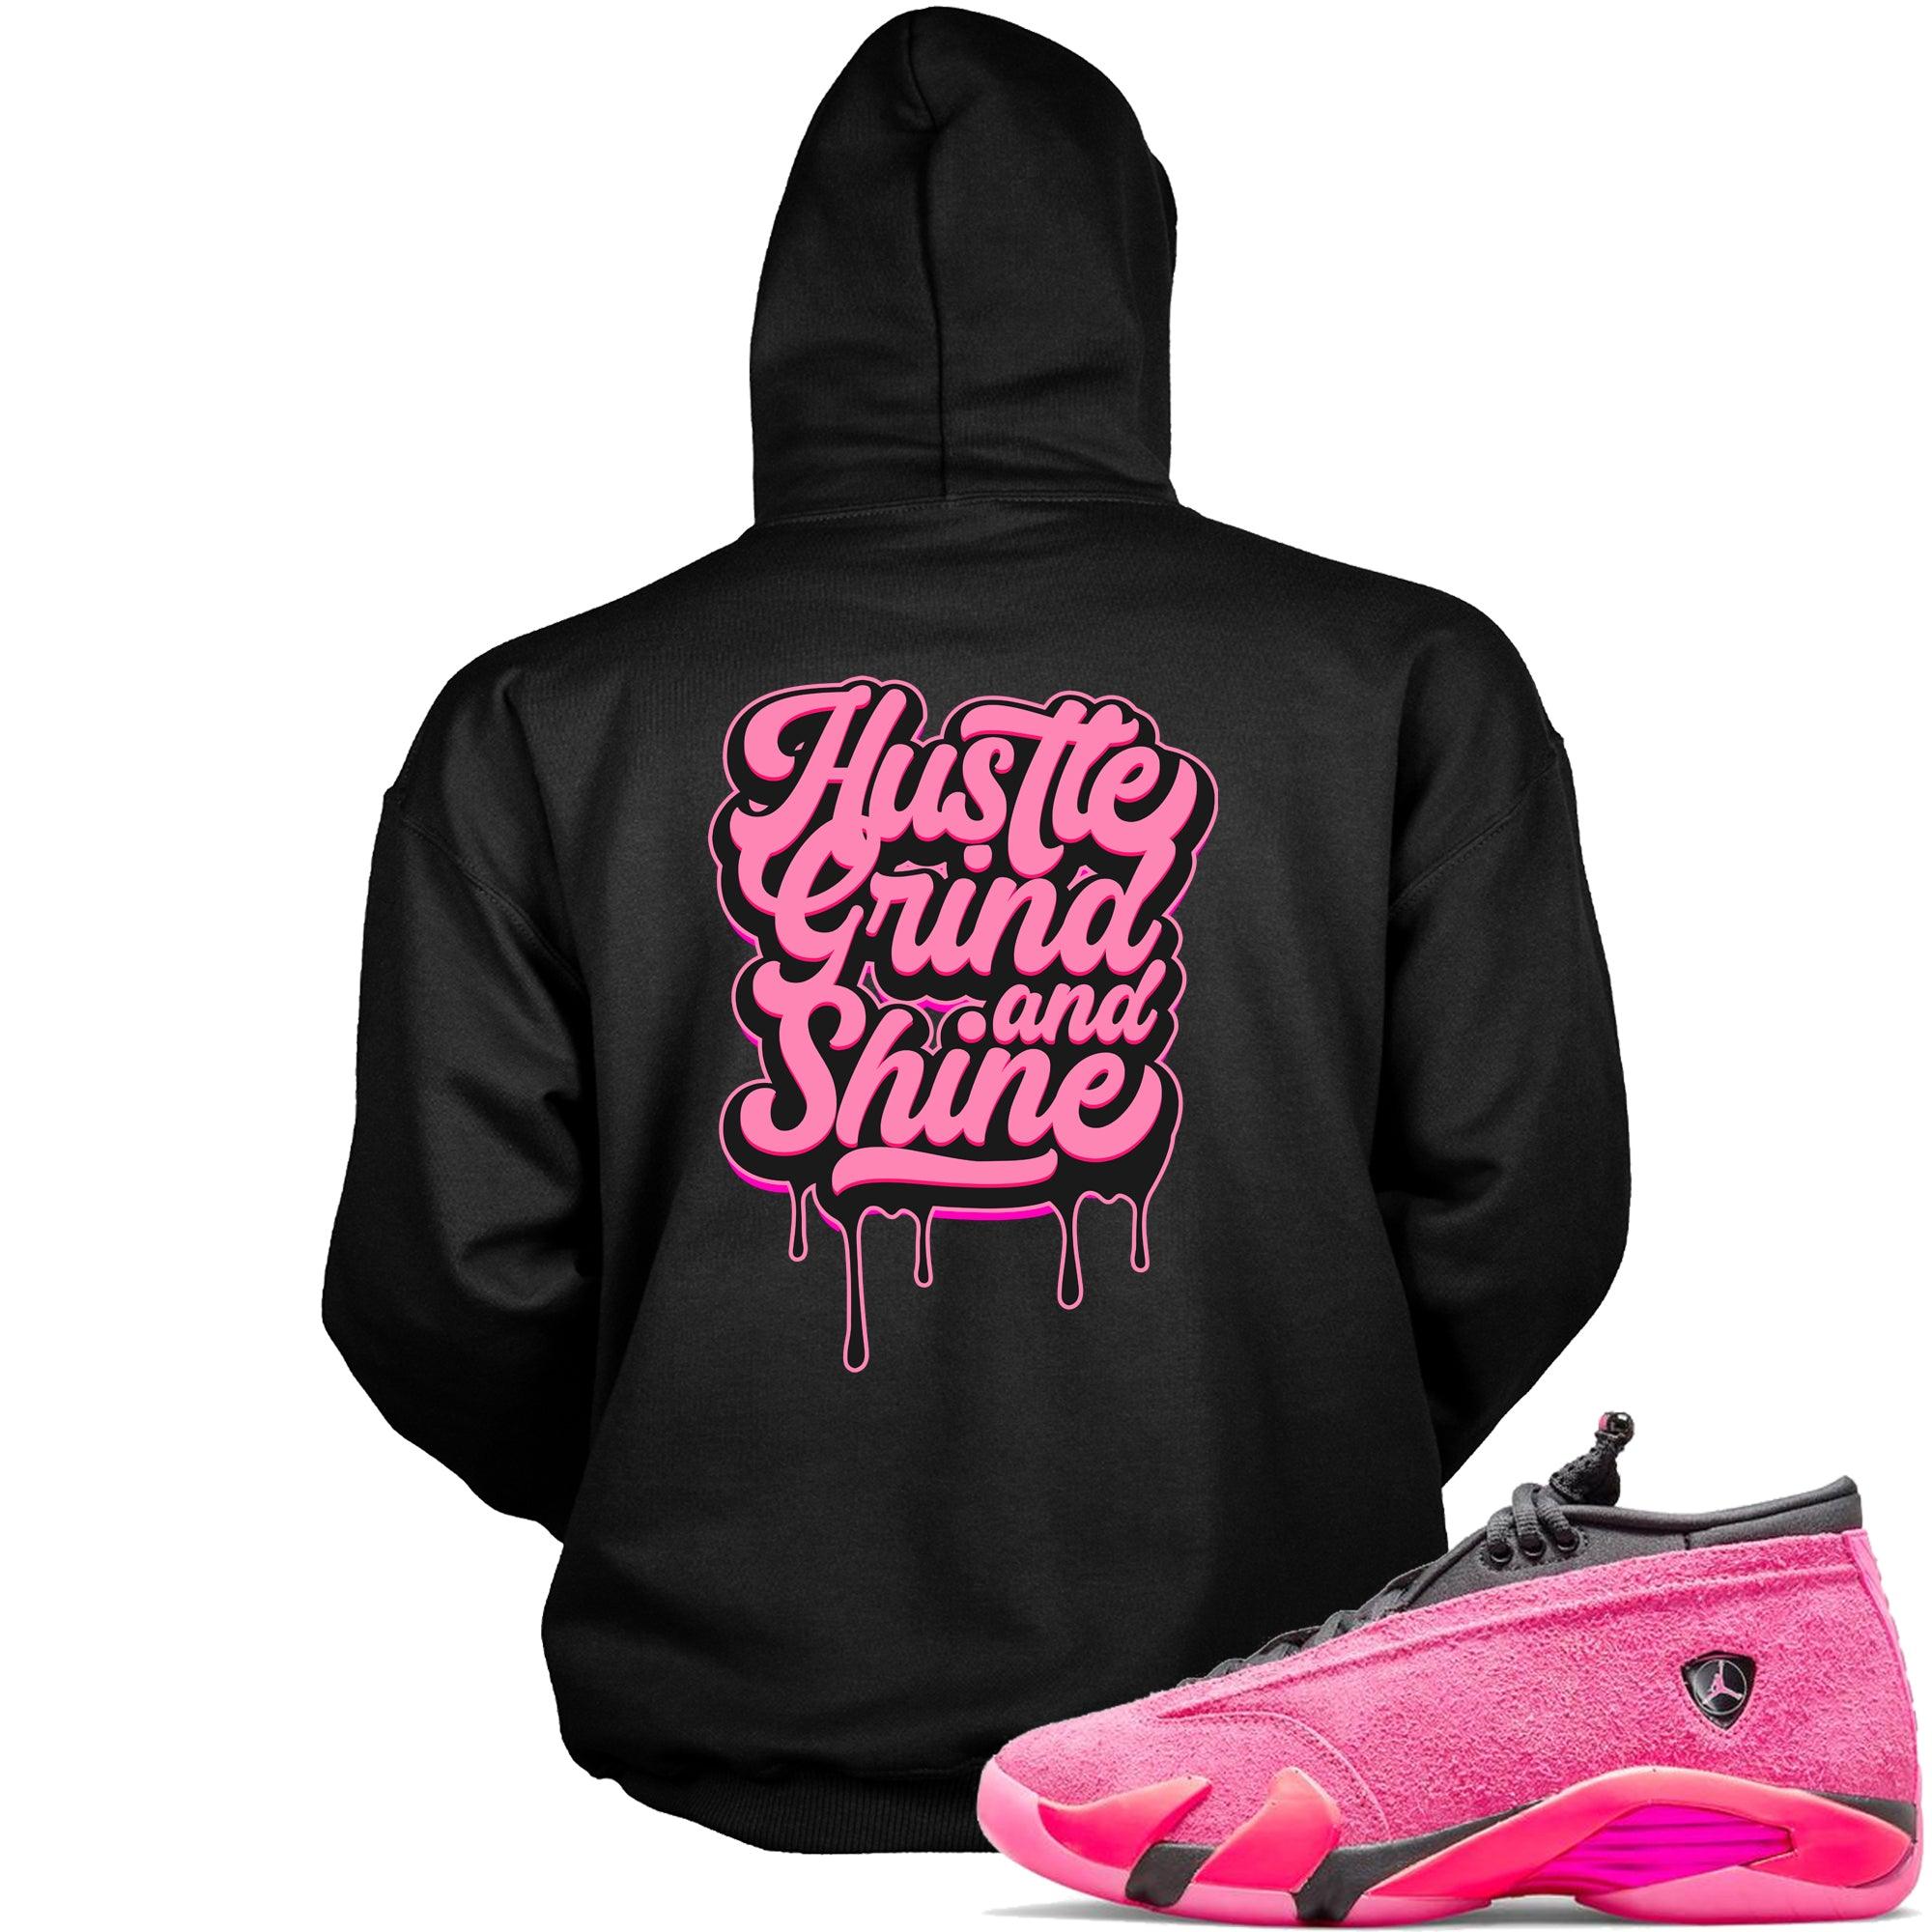 Black Hustle Grind and Shine Hoodie AJ 14 Low Shocking Pink photo